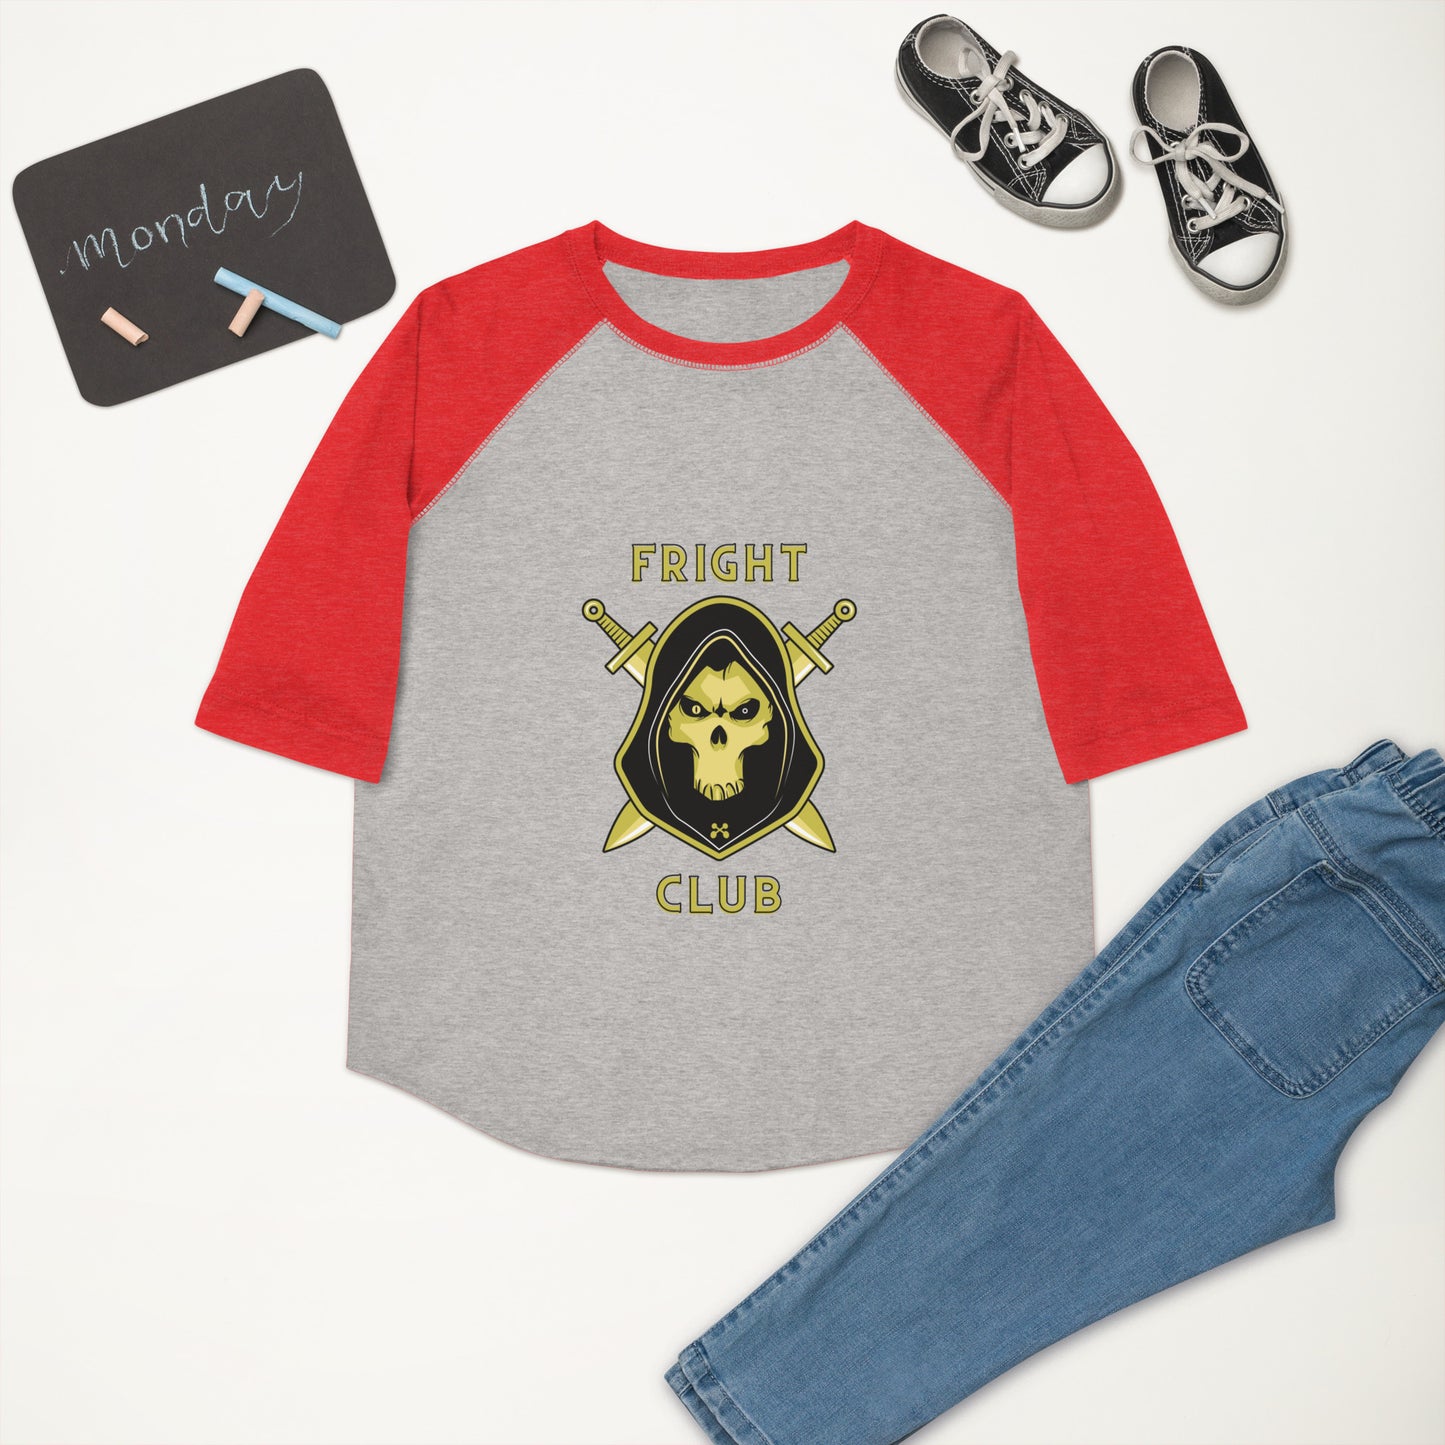 Fright Club Youth baseball shirt - A. Mandaline Art